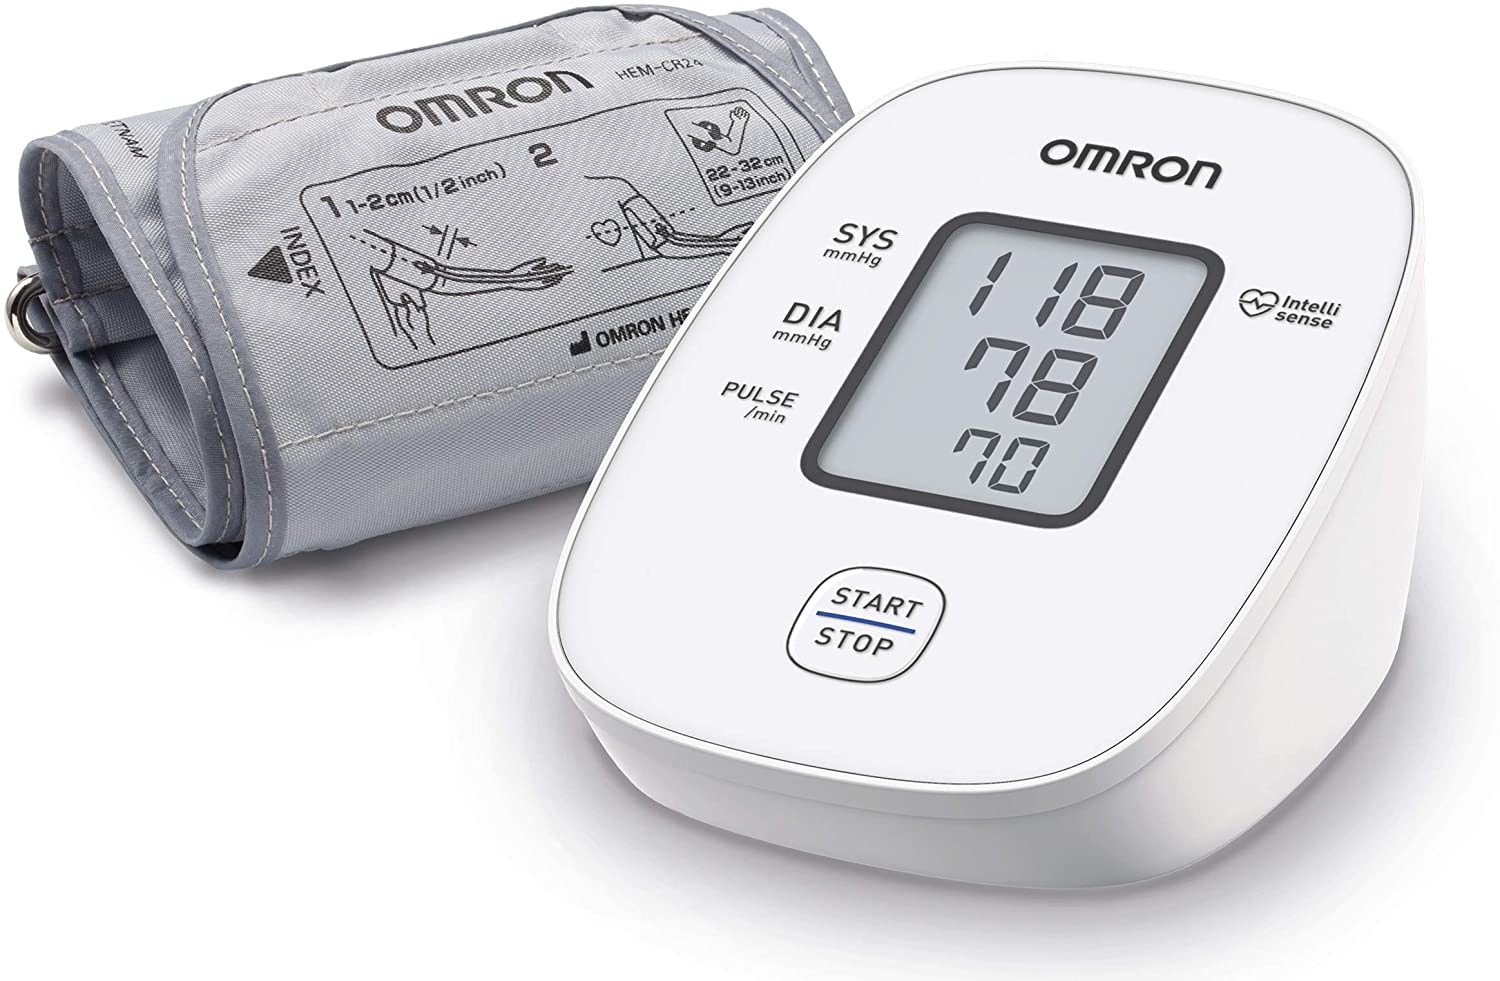 OMRON X2 Basic - Automatic blood pressure monitor for home blood pressure monitoring.